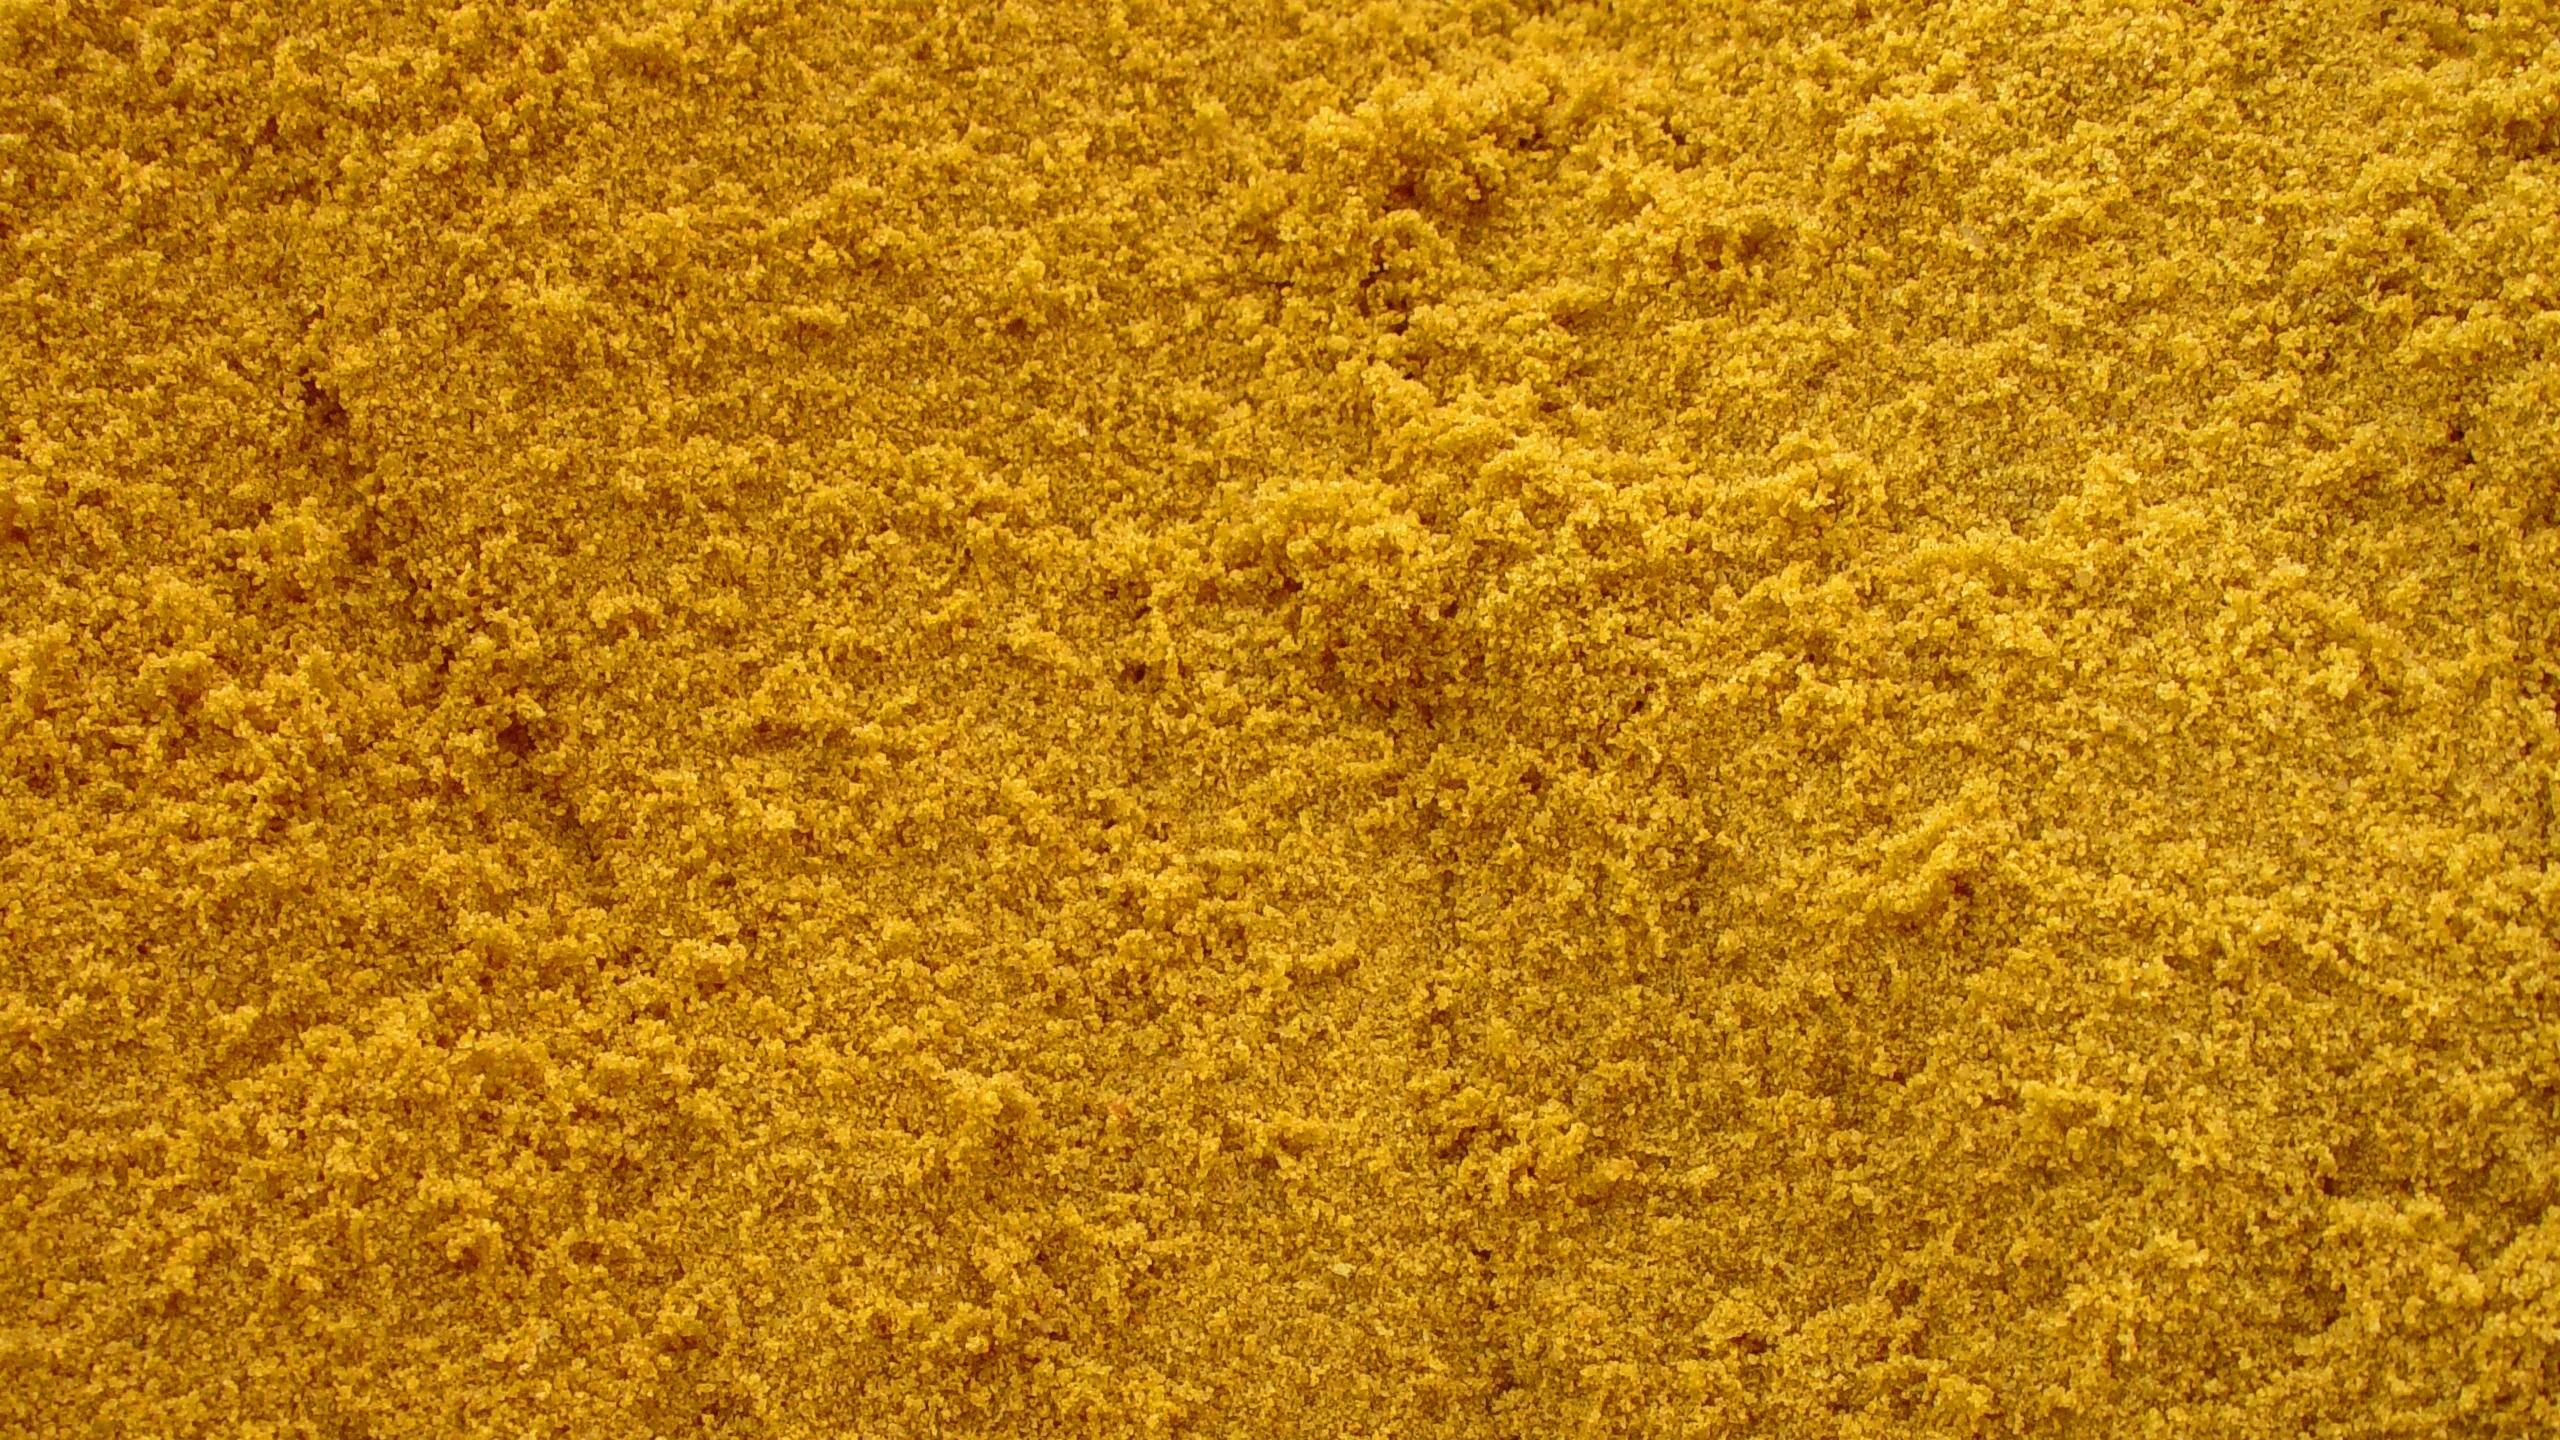 goldan wallpaper,yellow,ras el hanout,spice mix,turmeric,nutritional yeast